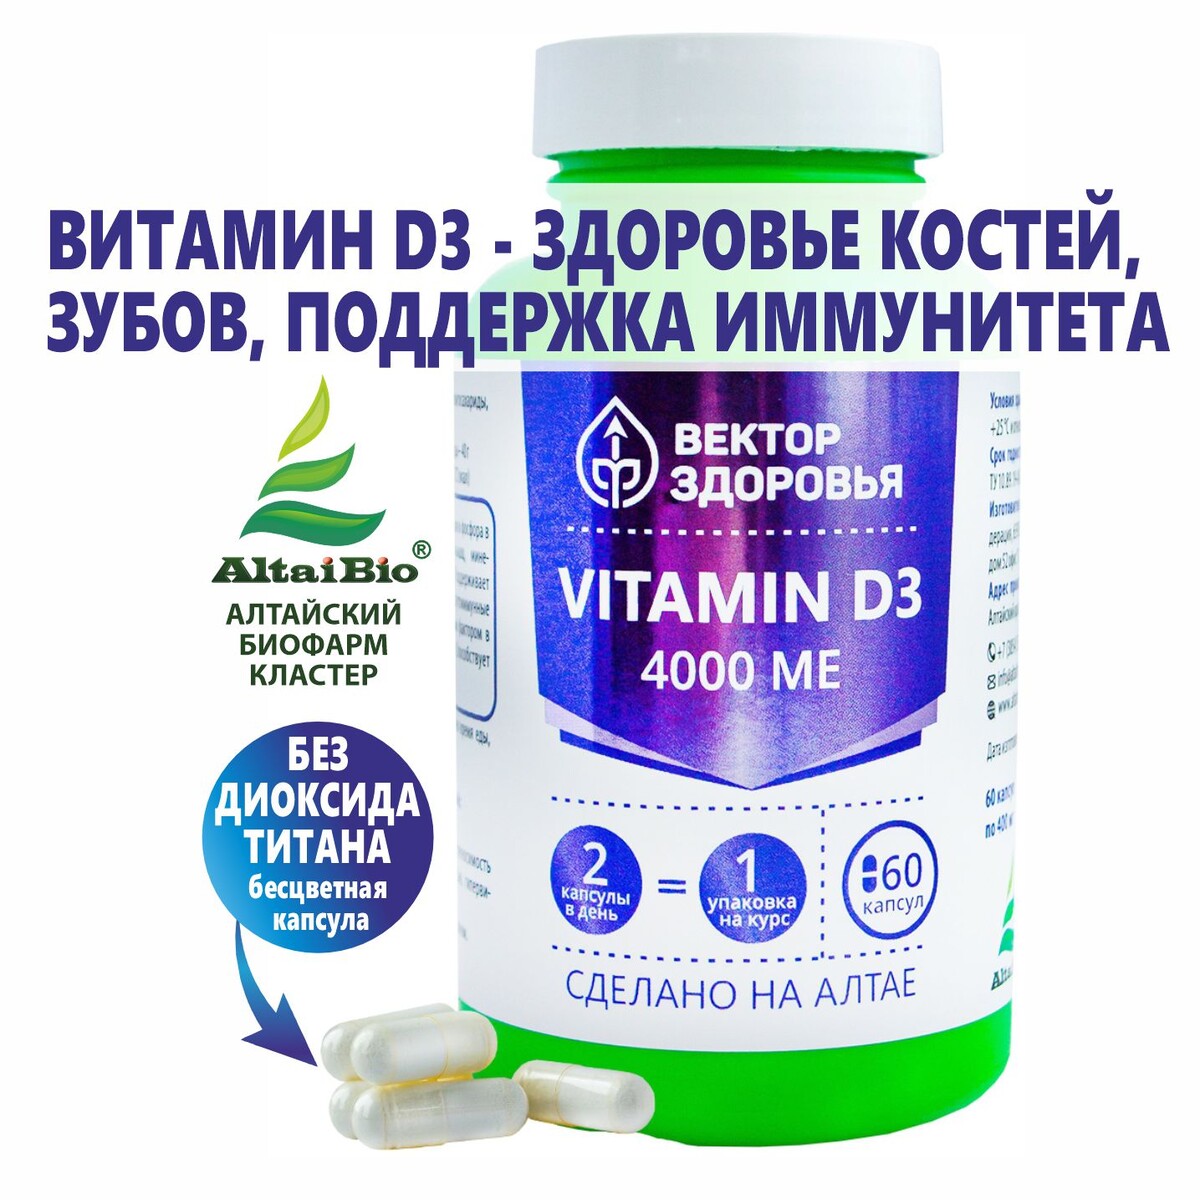 Комплекс vitamin d3 4000 ме, 60 капсул комплекс vitamin d3 4000 ме 60 капсул